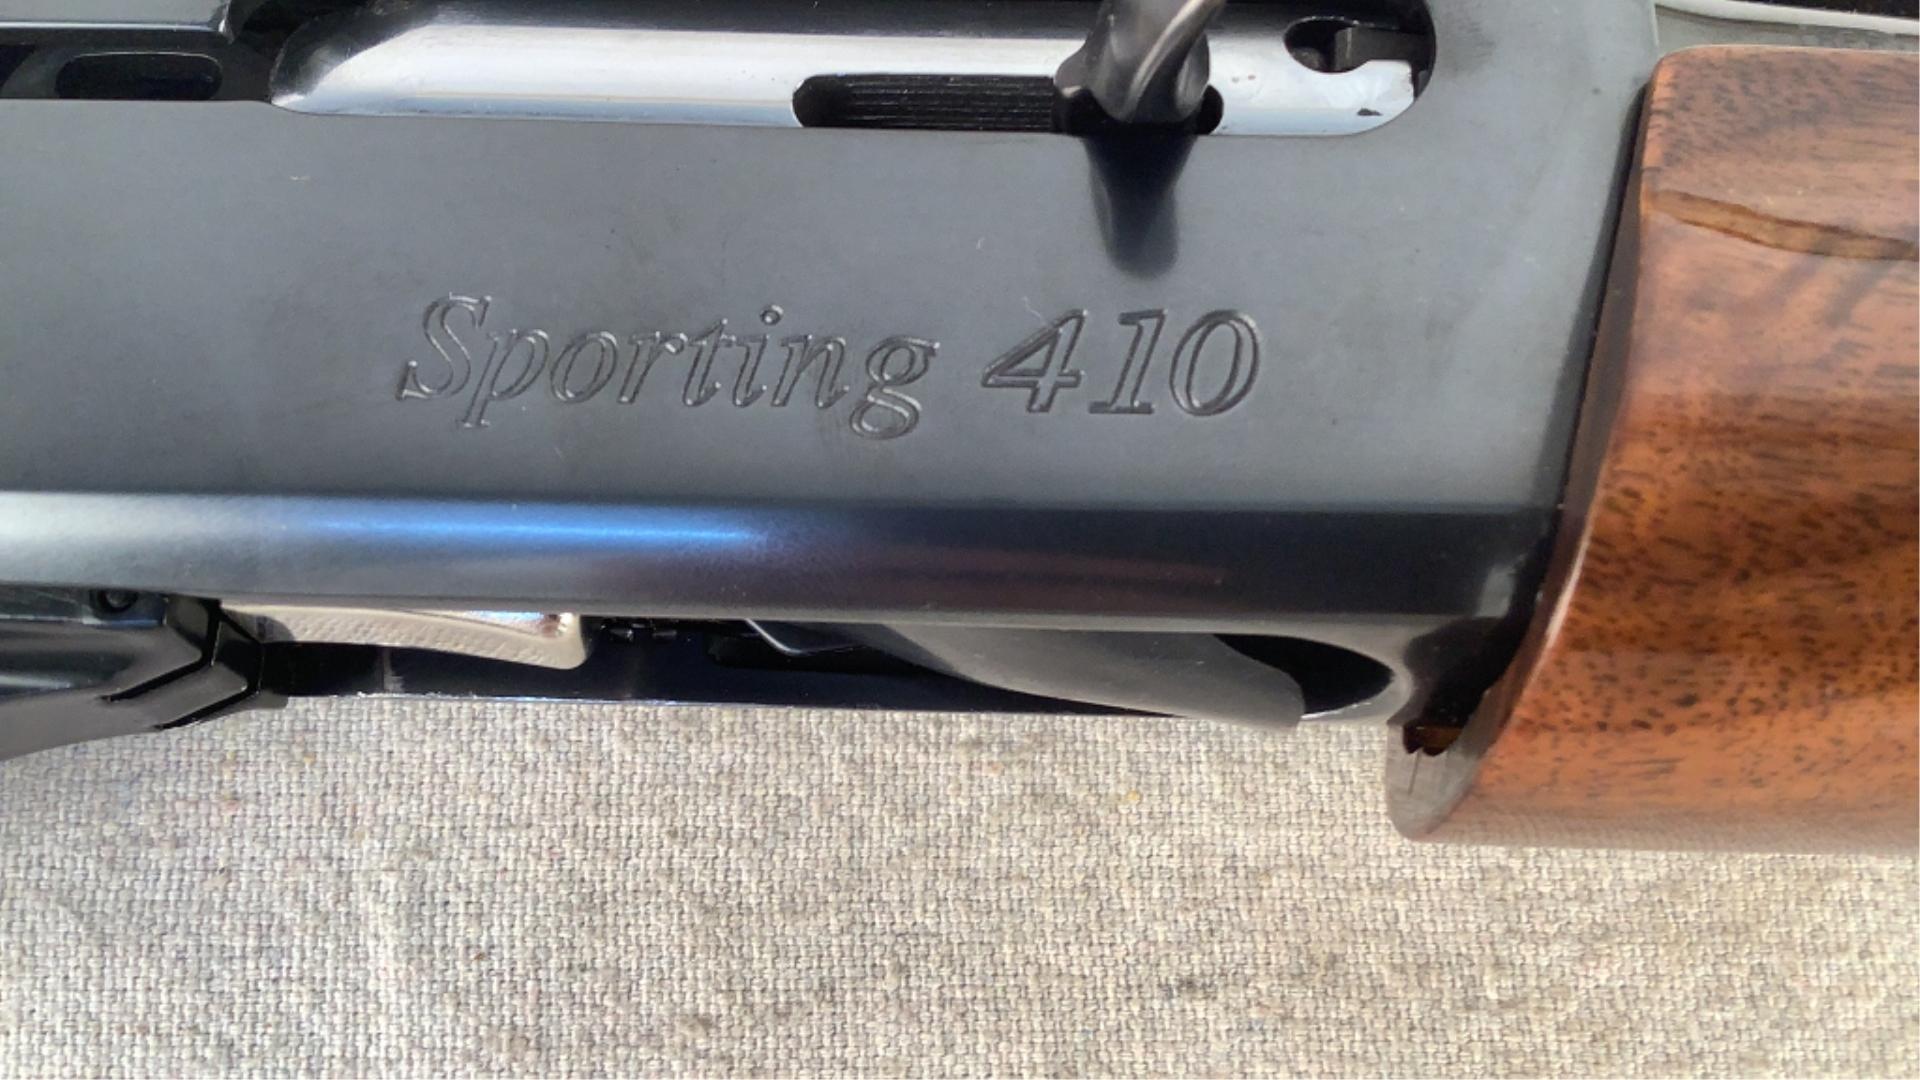 Remington Model 1100 Sporting 410 Bore